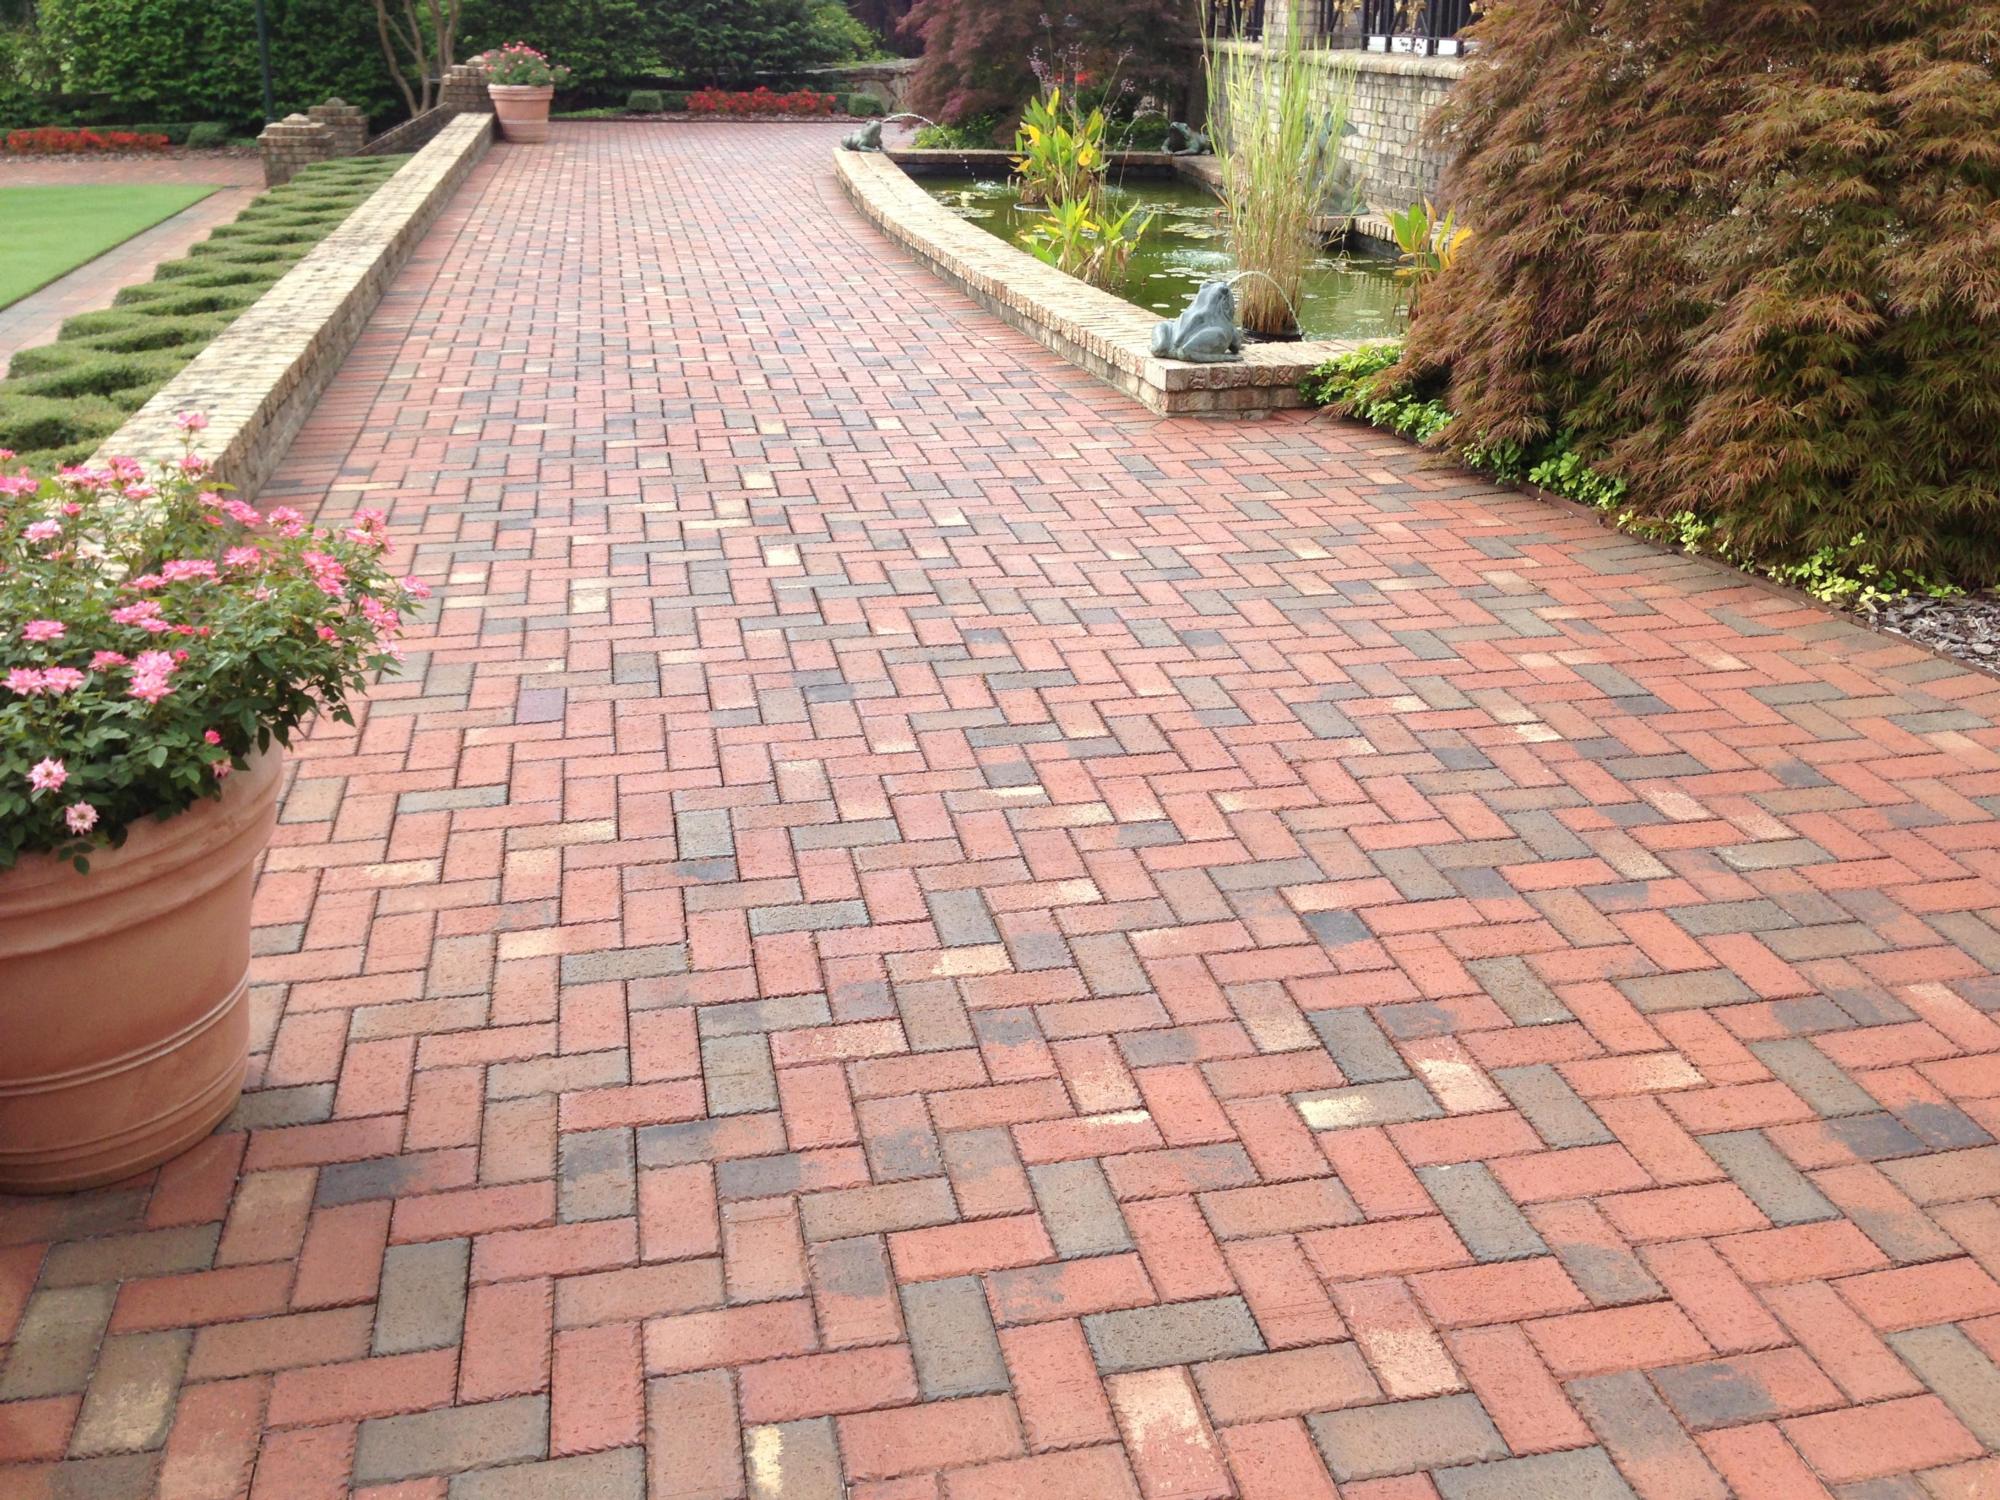 Image of a brick paved walkway